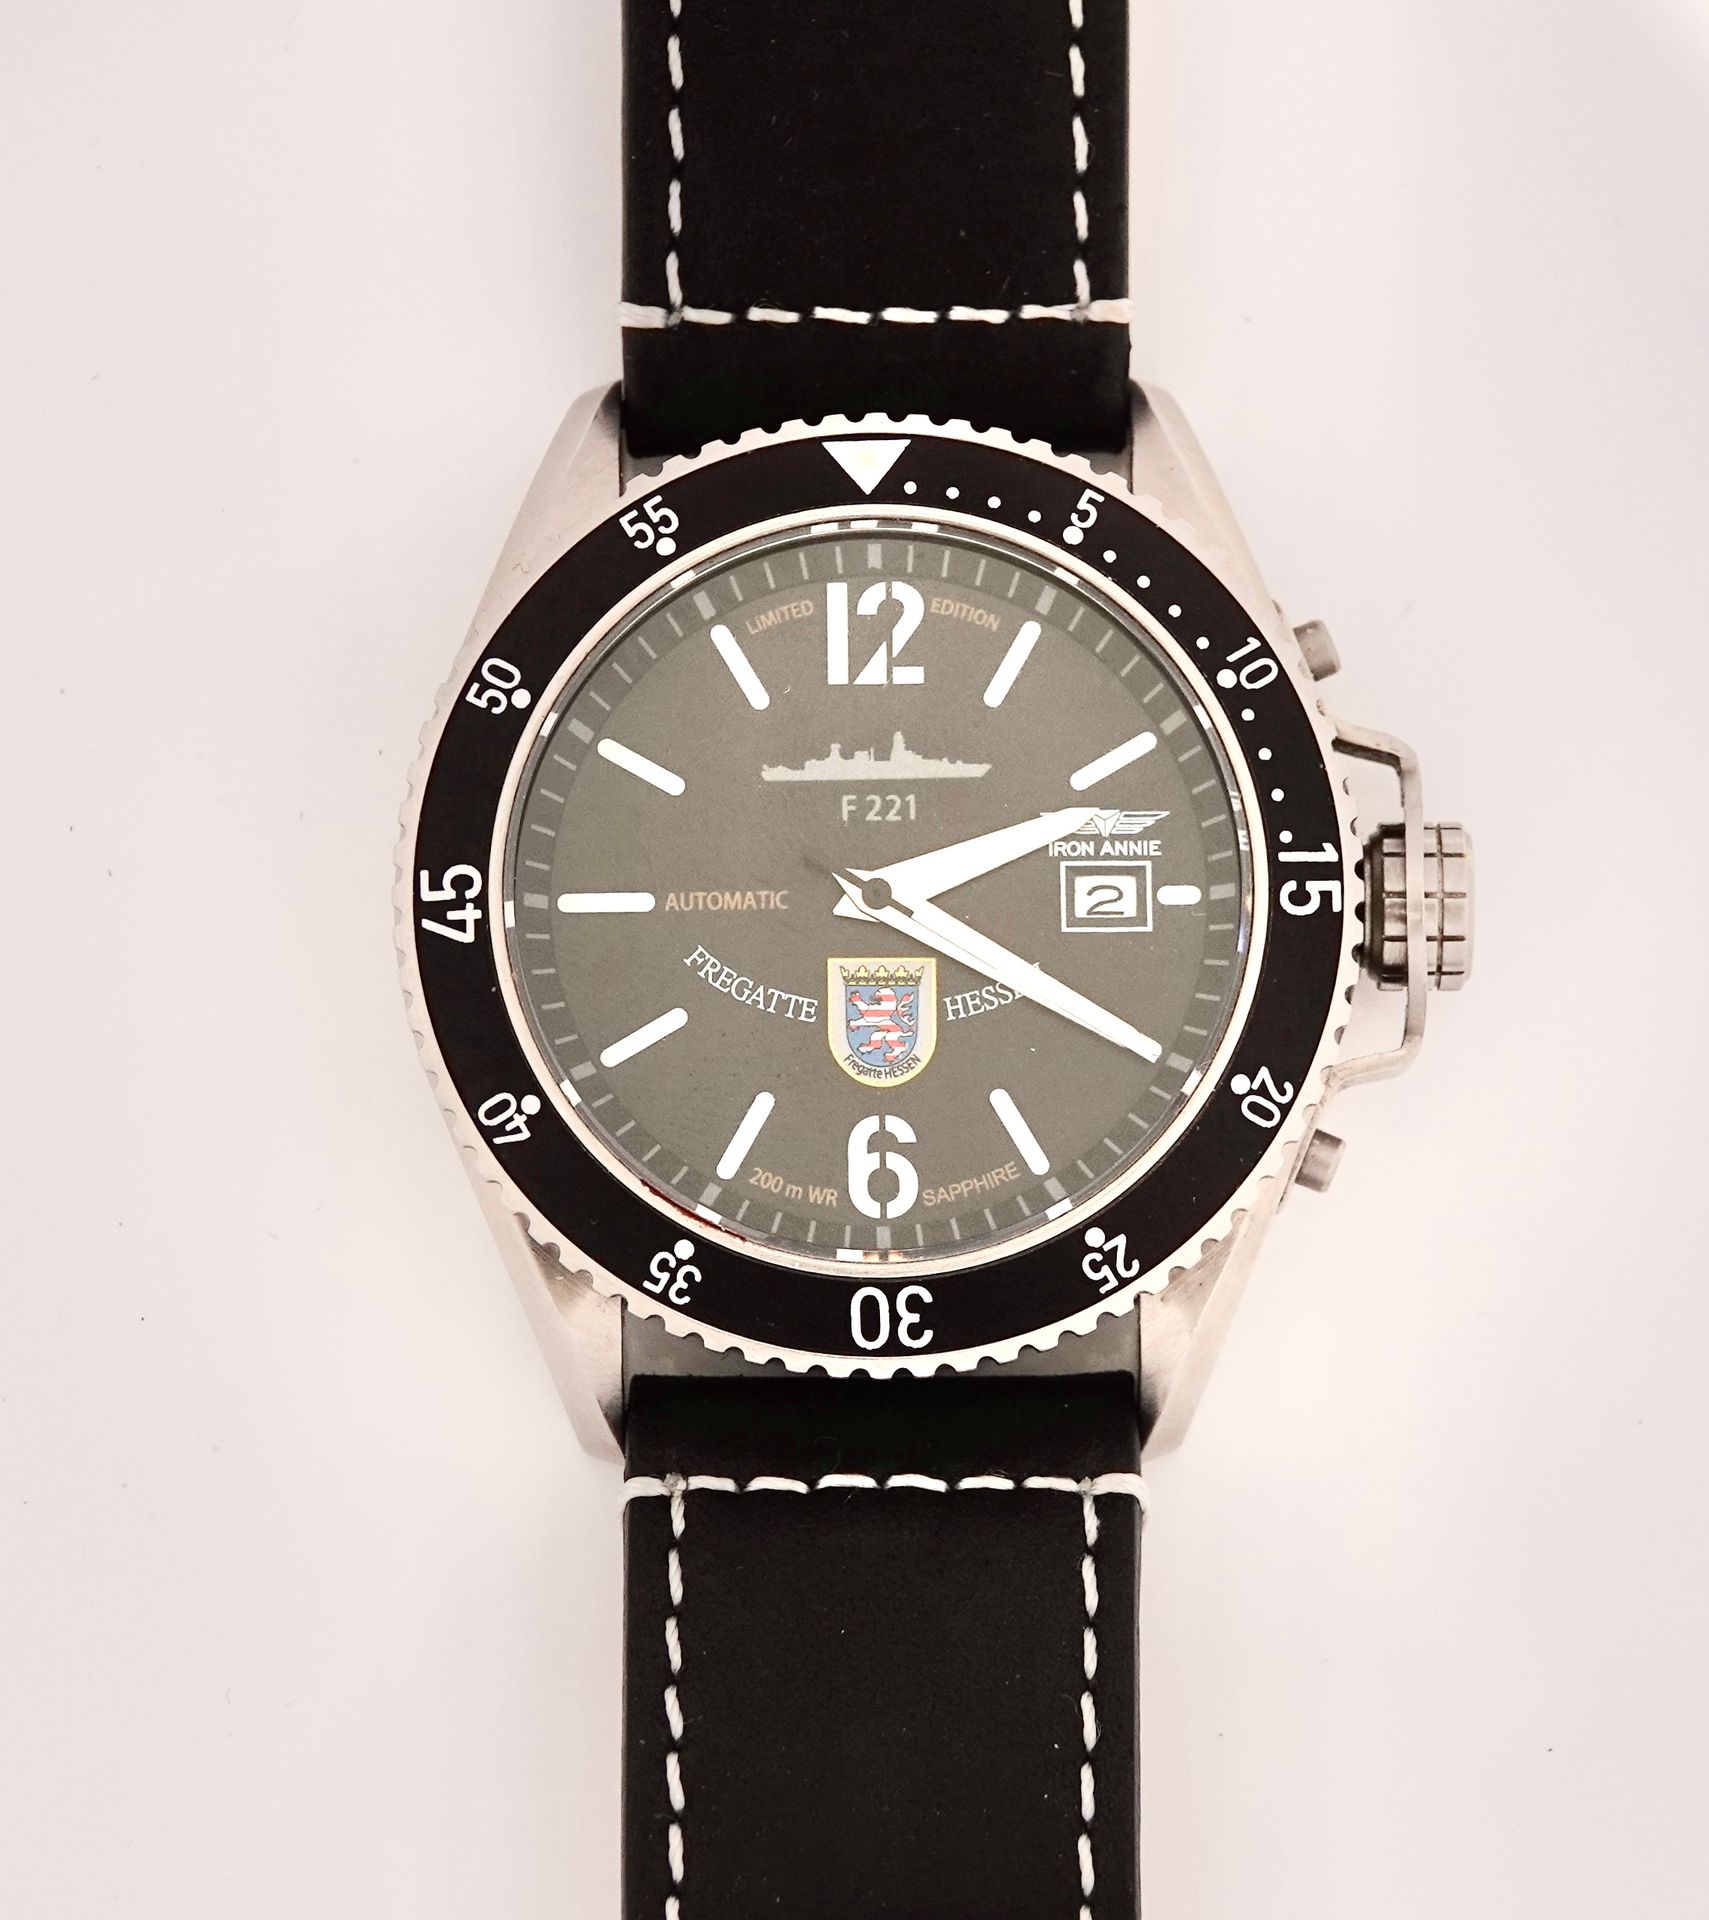 Null Fregatte Hessen
Steel diver's watch with automatic movement.
- Round case, &hellip;